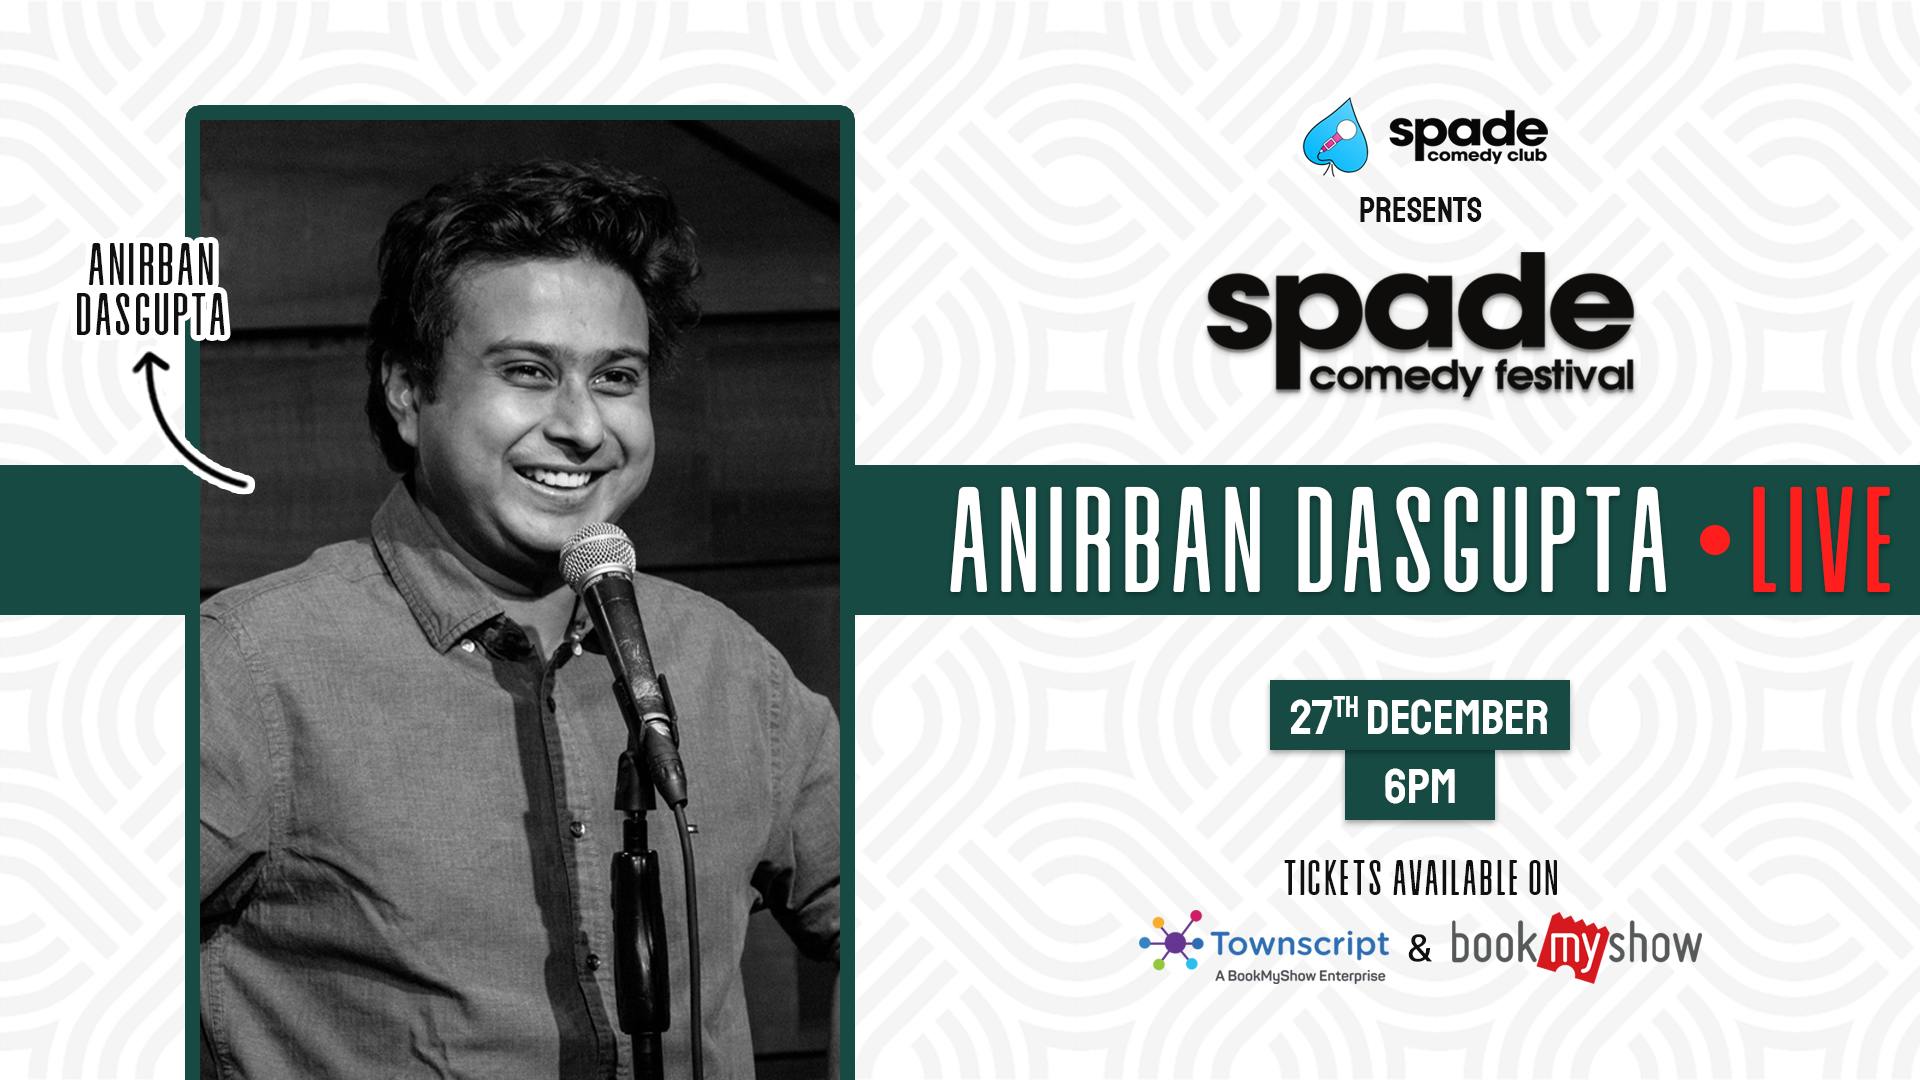 Anirban Dasgupta Live at Spade Comedy Festival